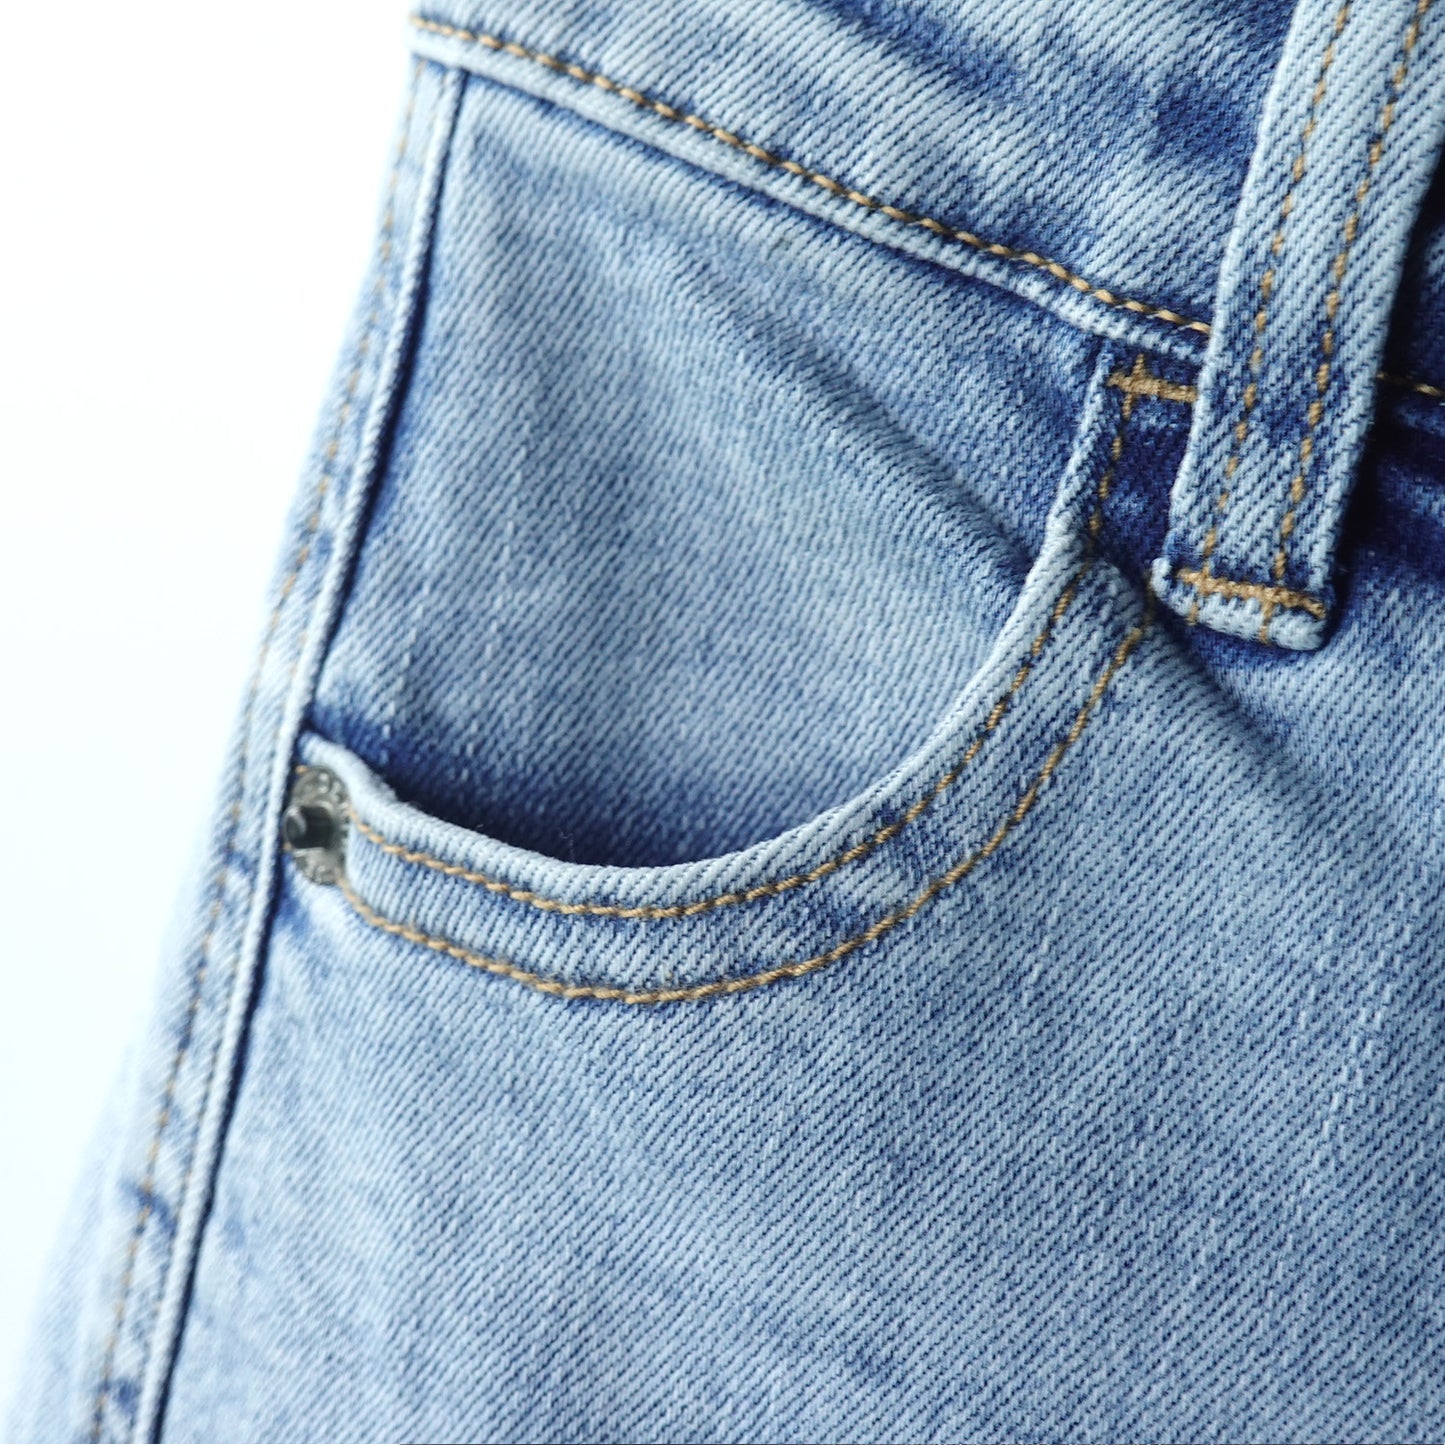 Boys Jeans Children Ripped Soft Stretchy Classic Denim Pants